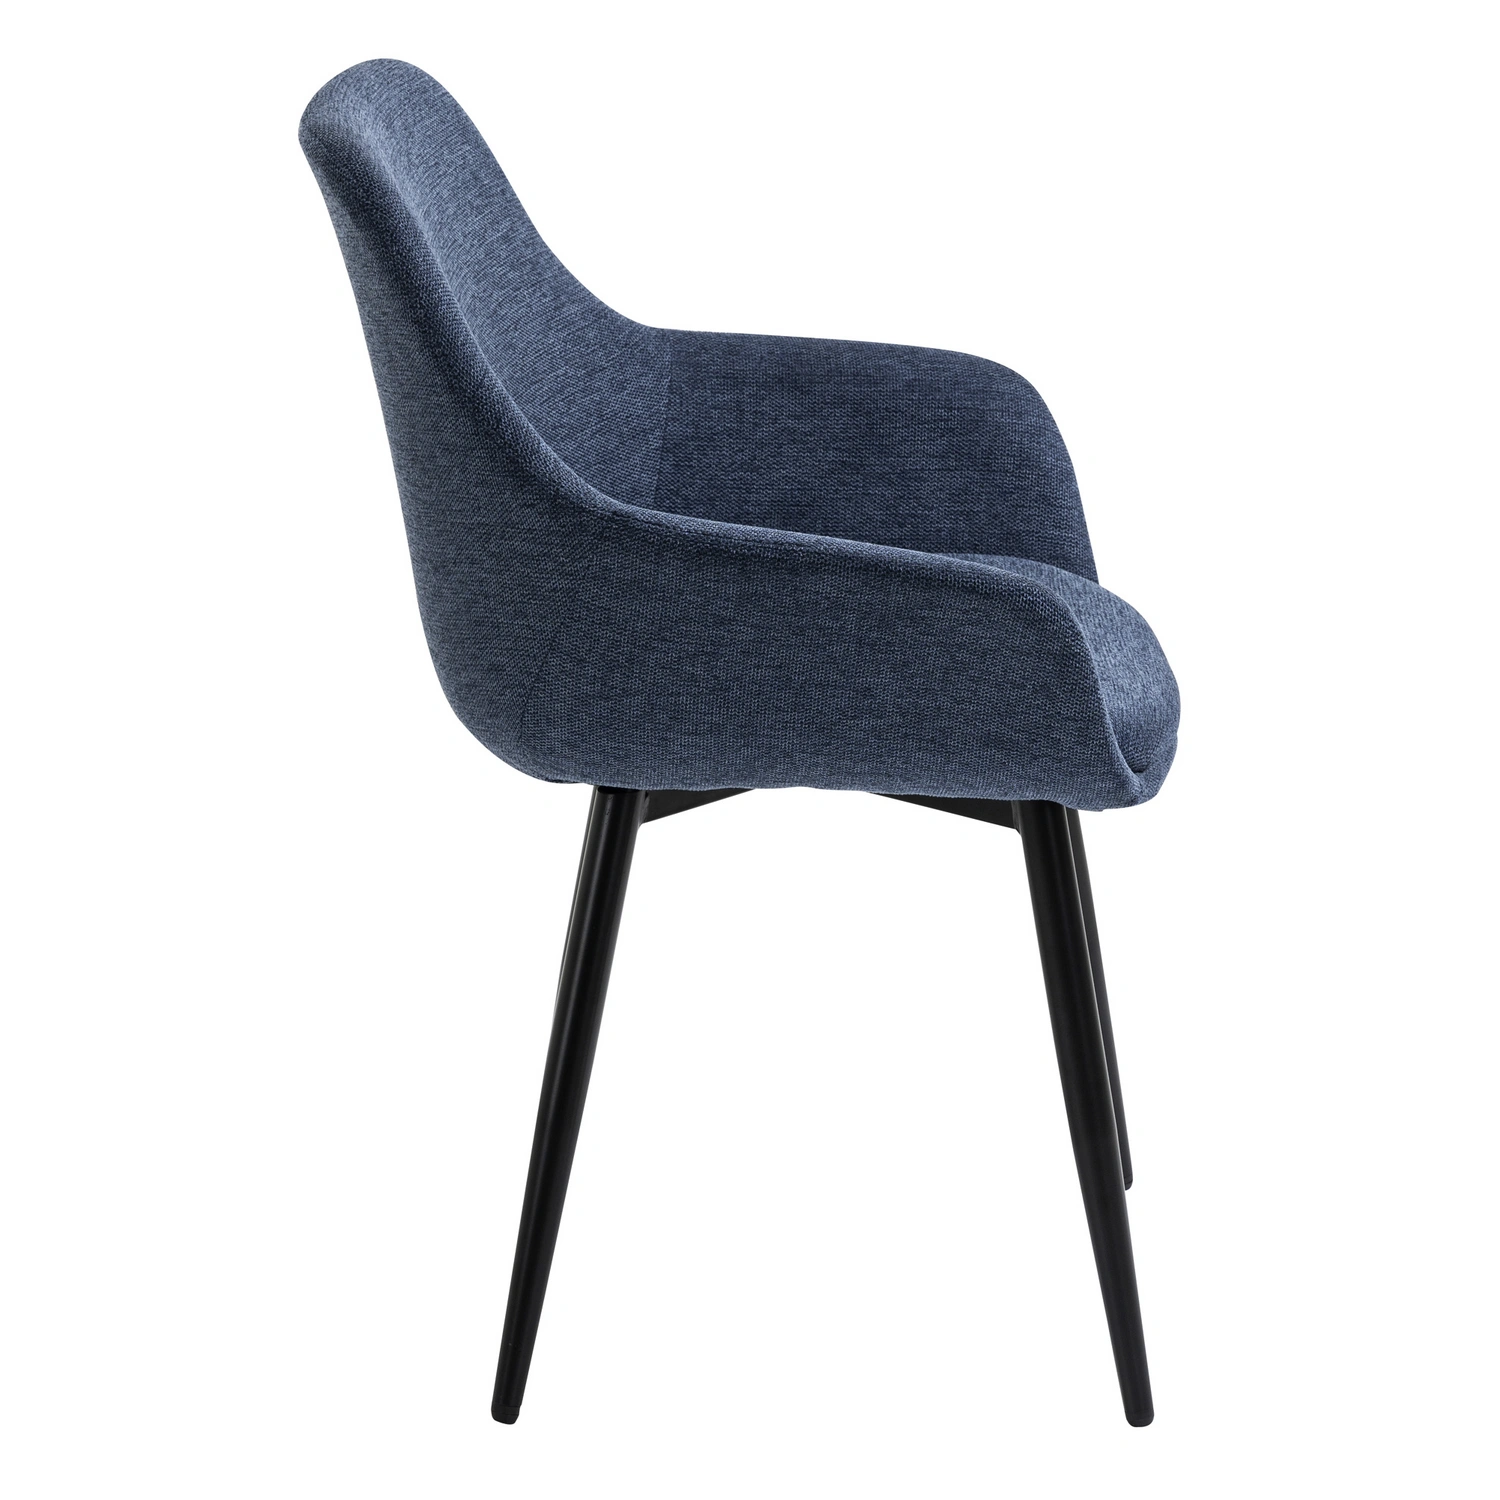 86 SalesFever Stuhl, dunkelblau/schwarz, stk Höhe: 2 cm,